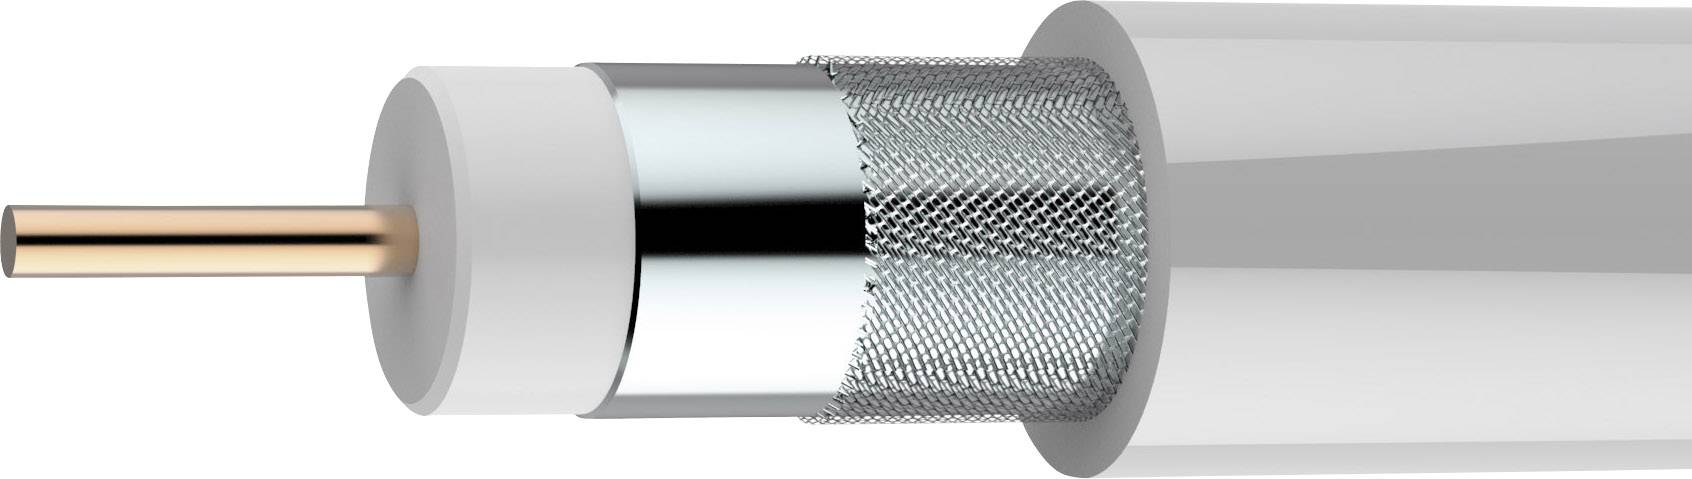 AXING Koaxialkabel Außen-Durchmesser: 6.80 mm 75 ¿ 90 dB Weiß Axing SKB 89-03 Meterware